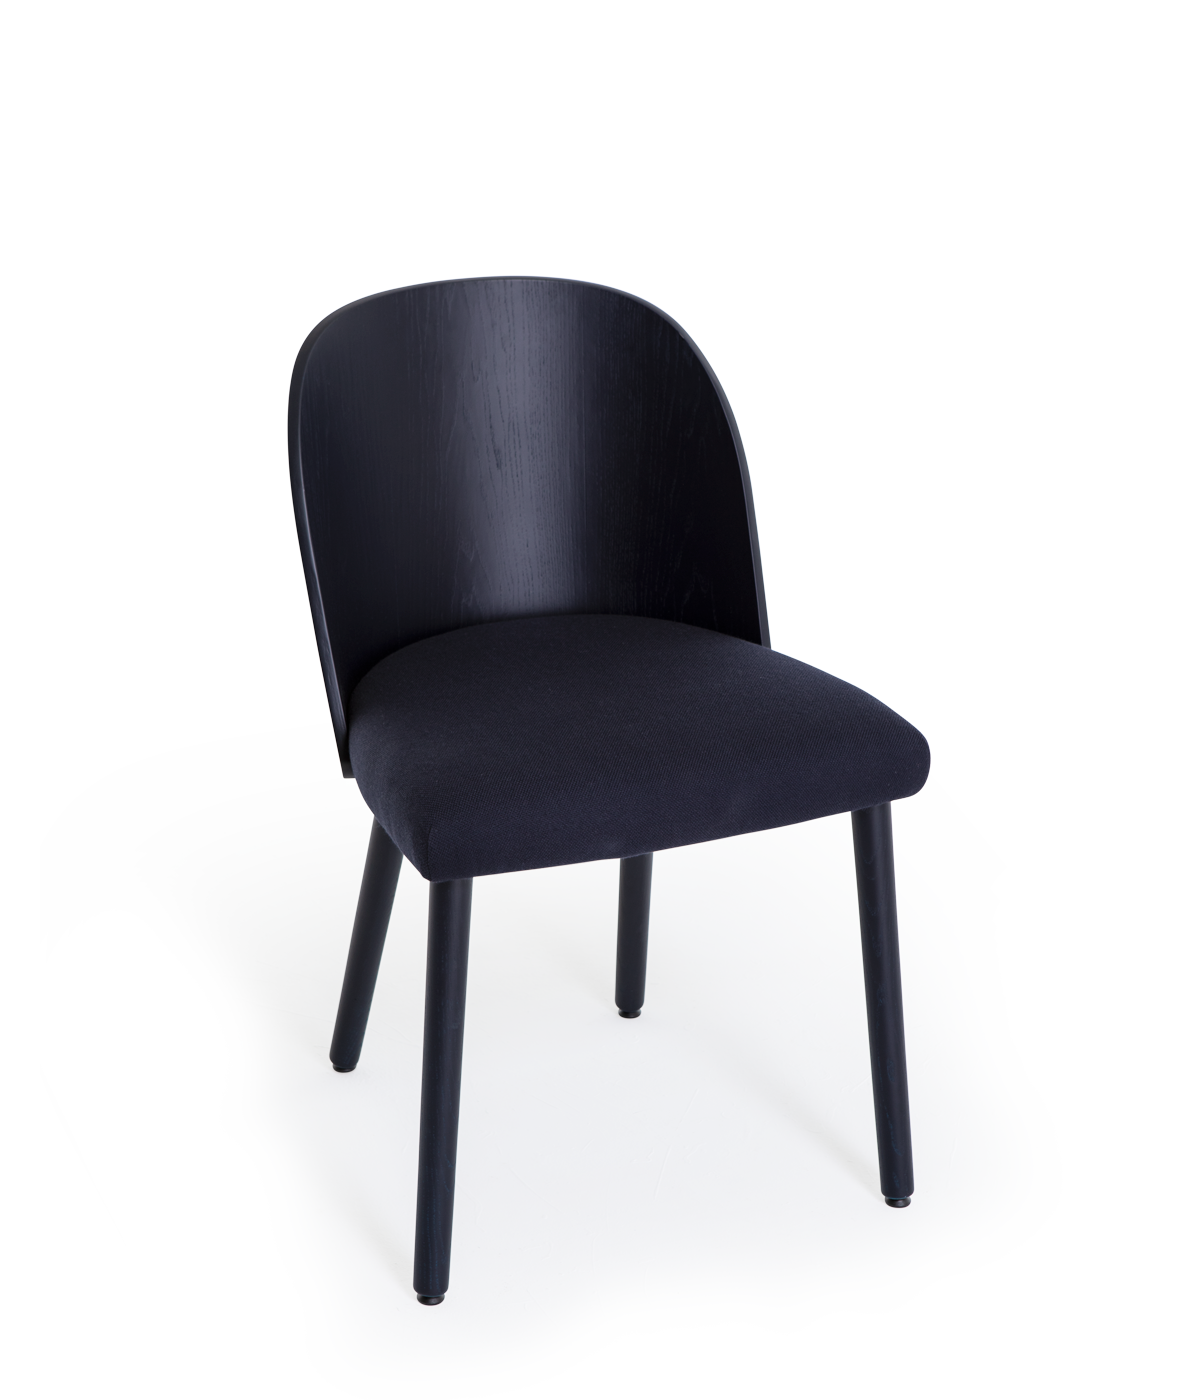 Vergés - Cistell Slim chair with wooden legs